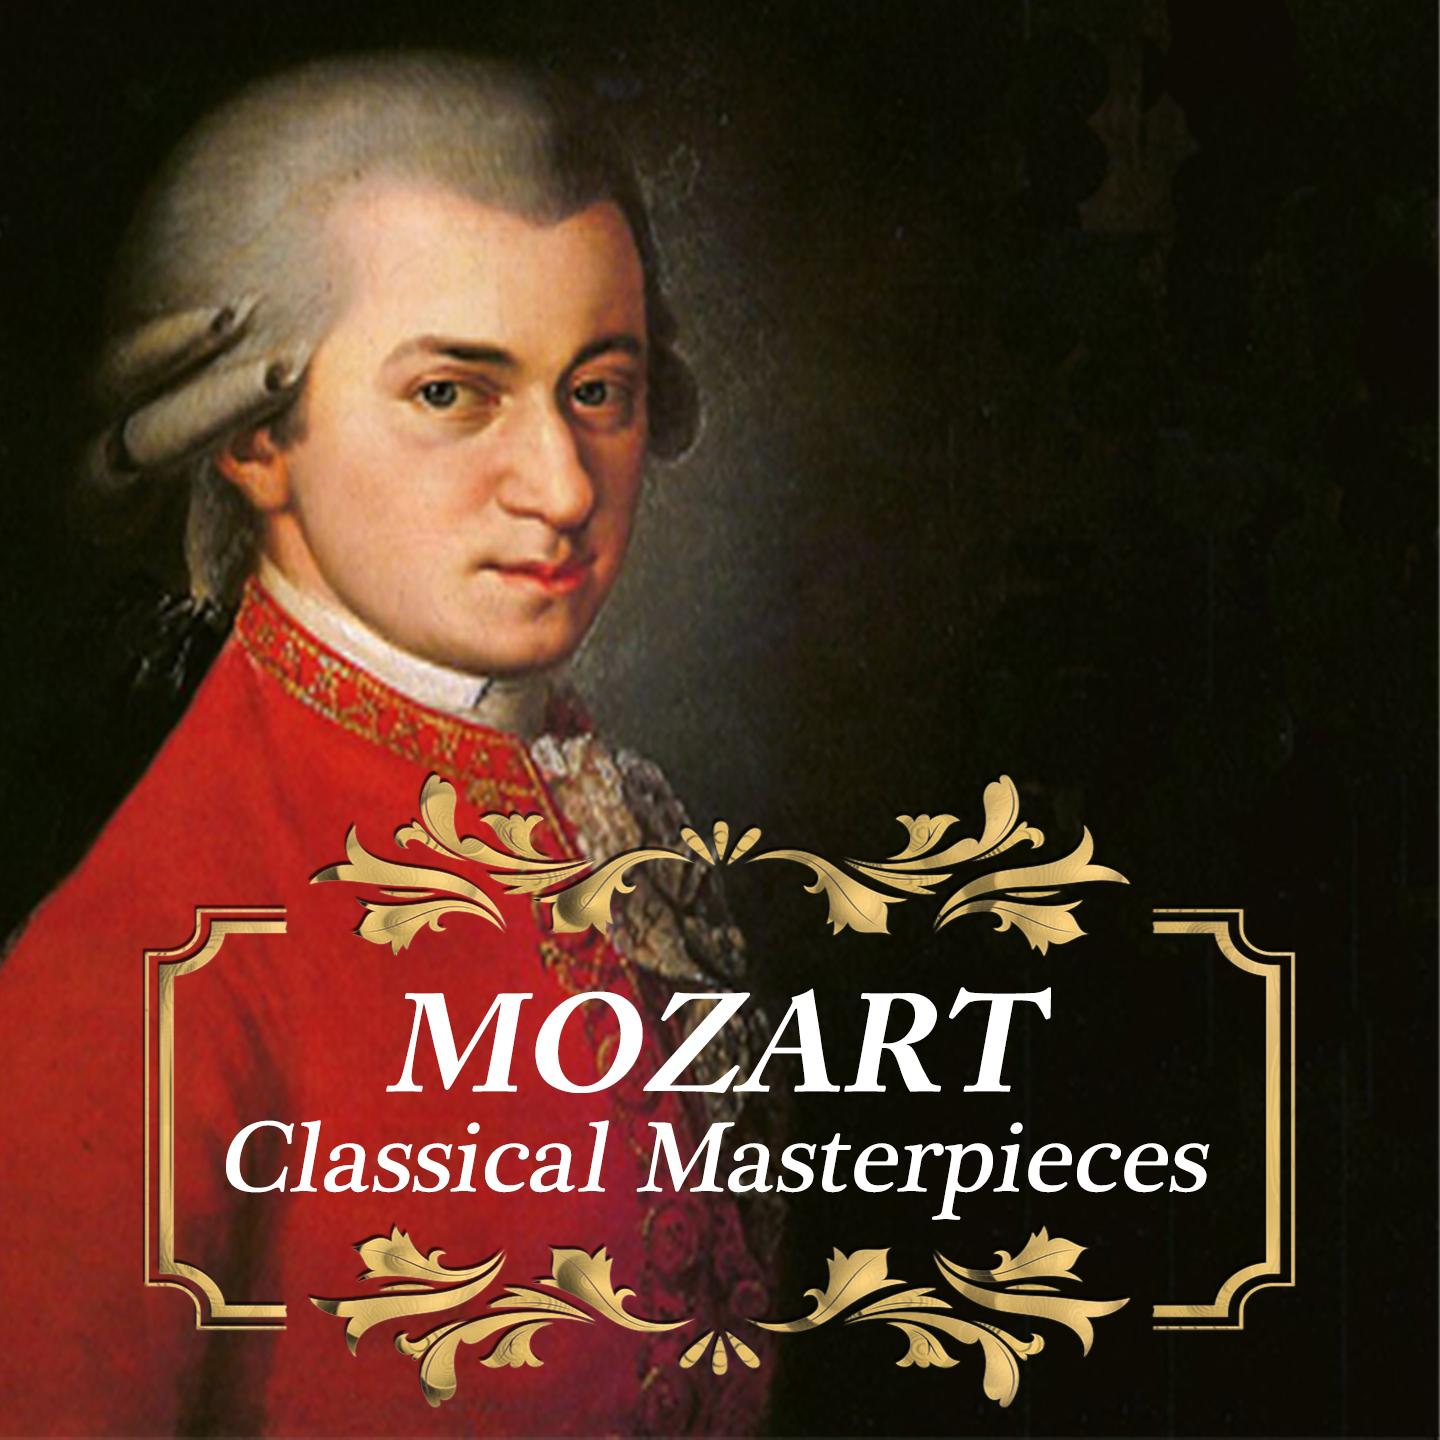 Mozart - Classical Masterpieces